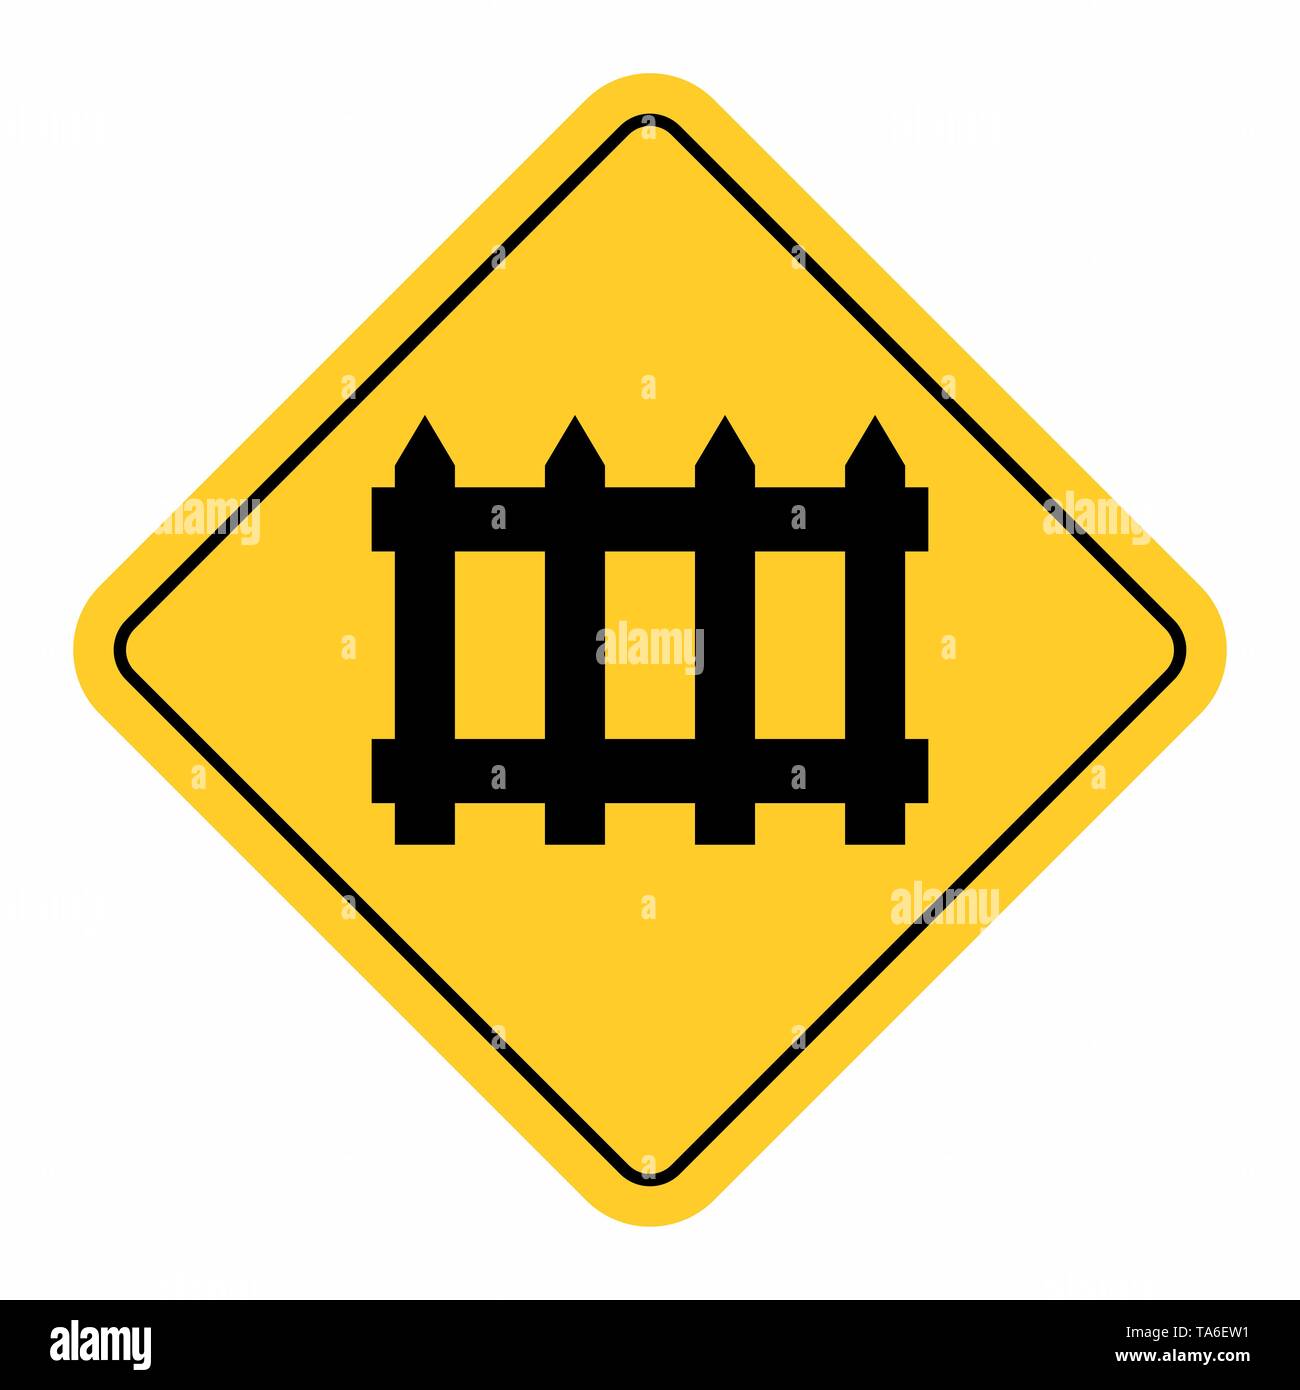 Barrier Railway cross traffic sign Stock Vector